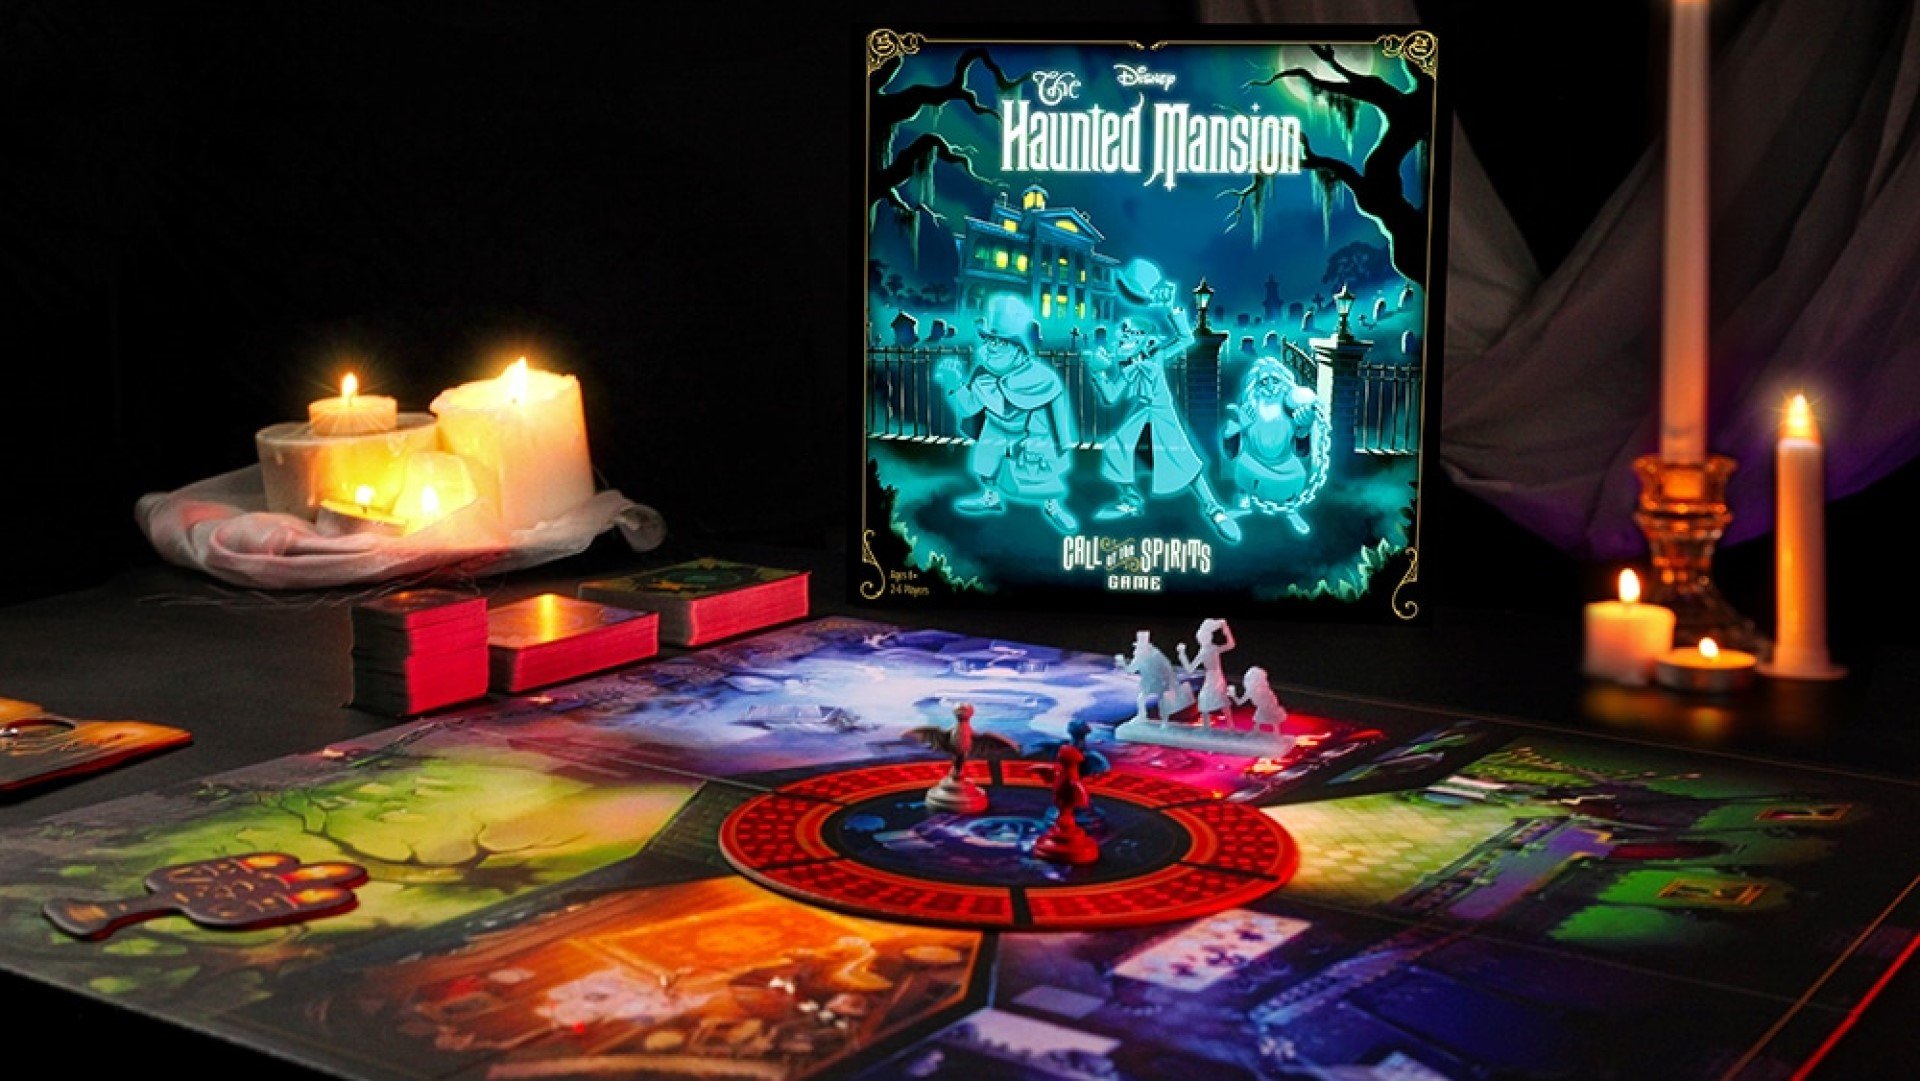 Disney board games - Disney Haunted Mansion board game setup